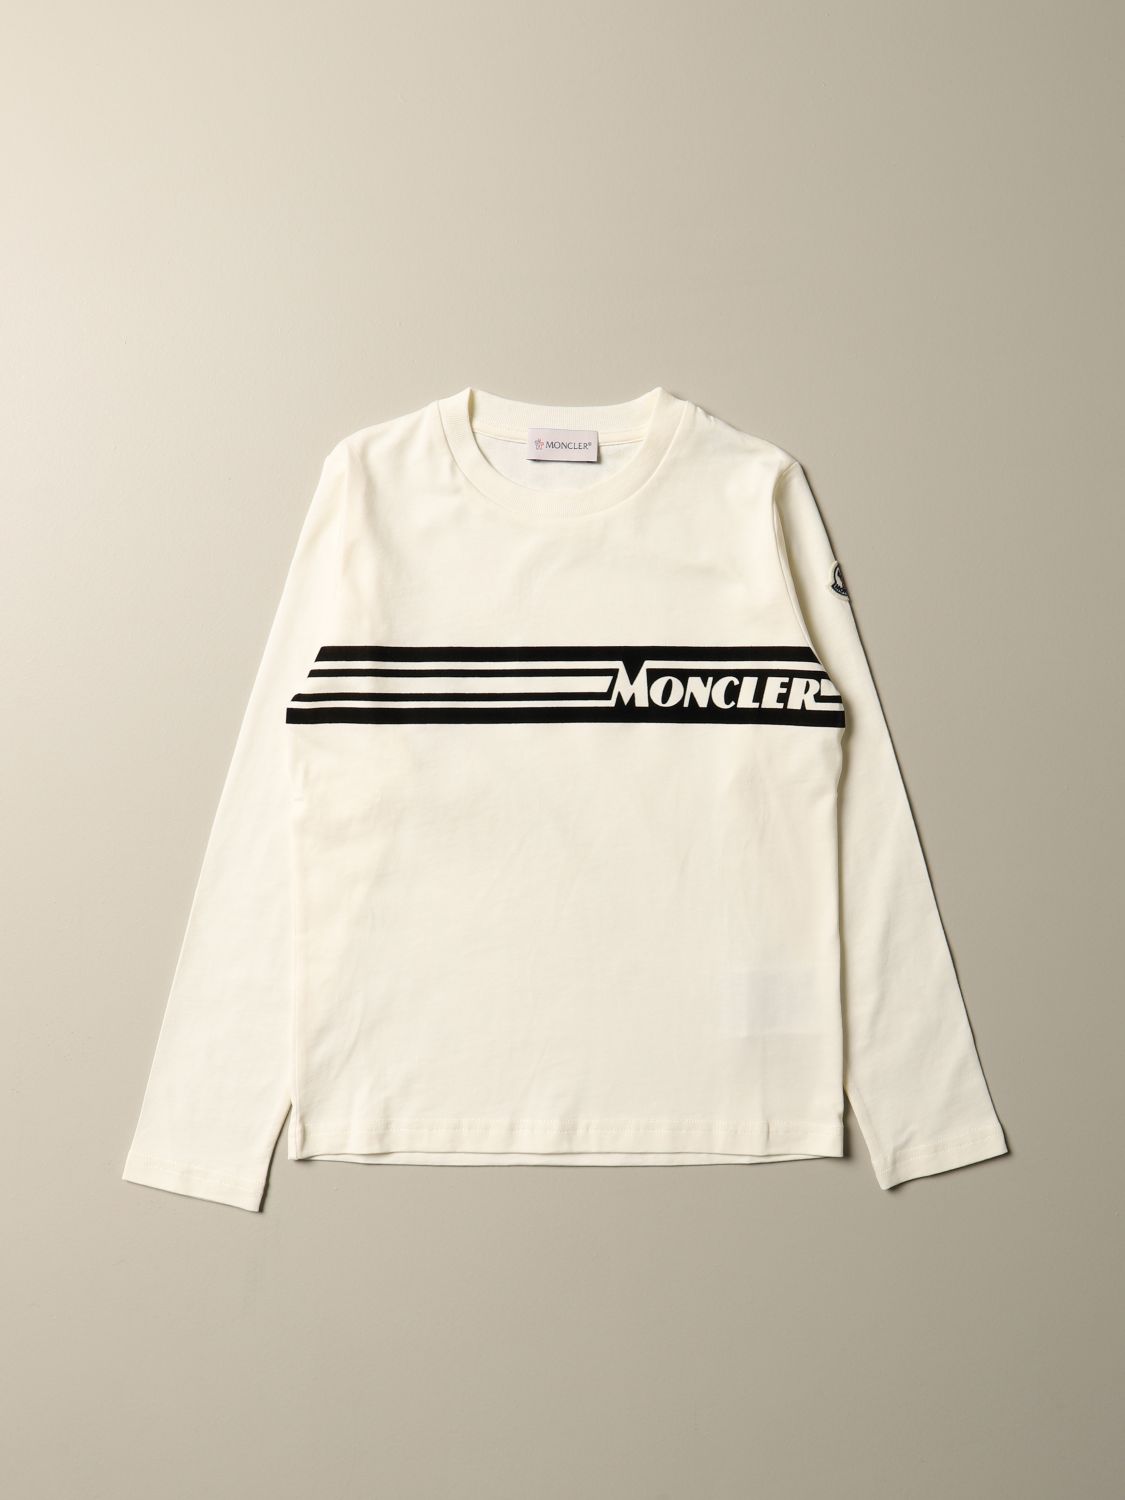 moncler white logo t shirt